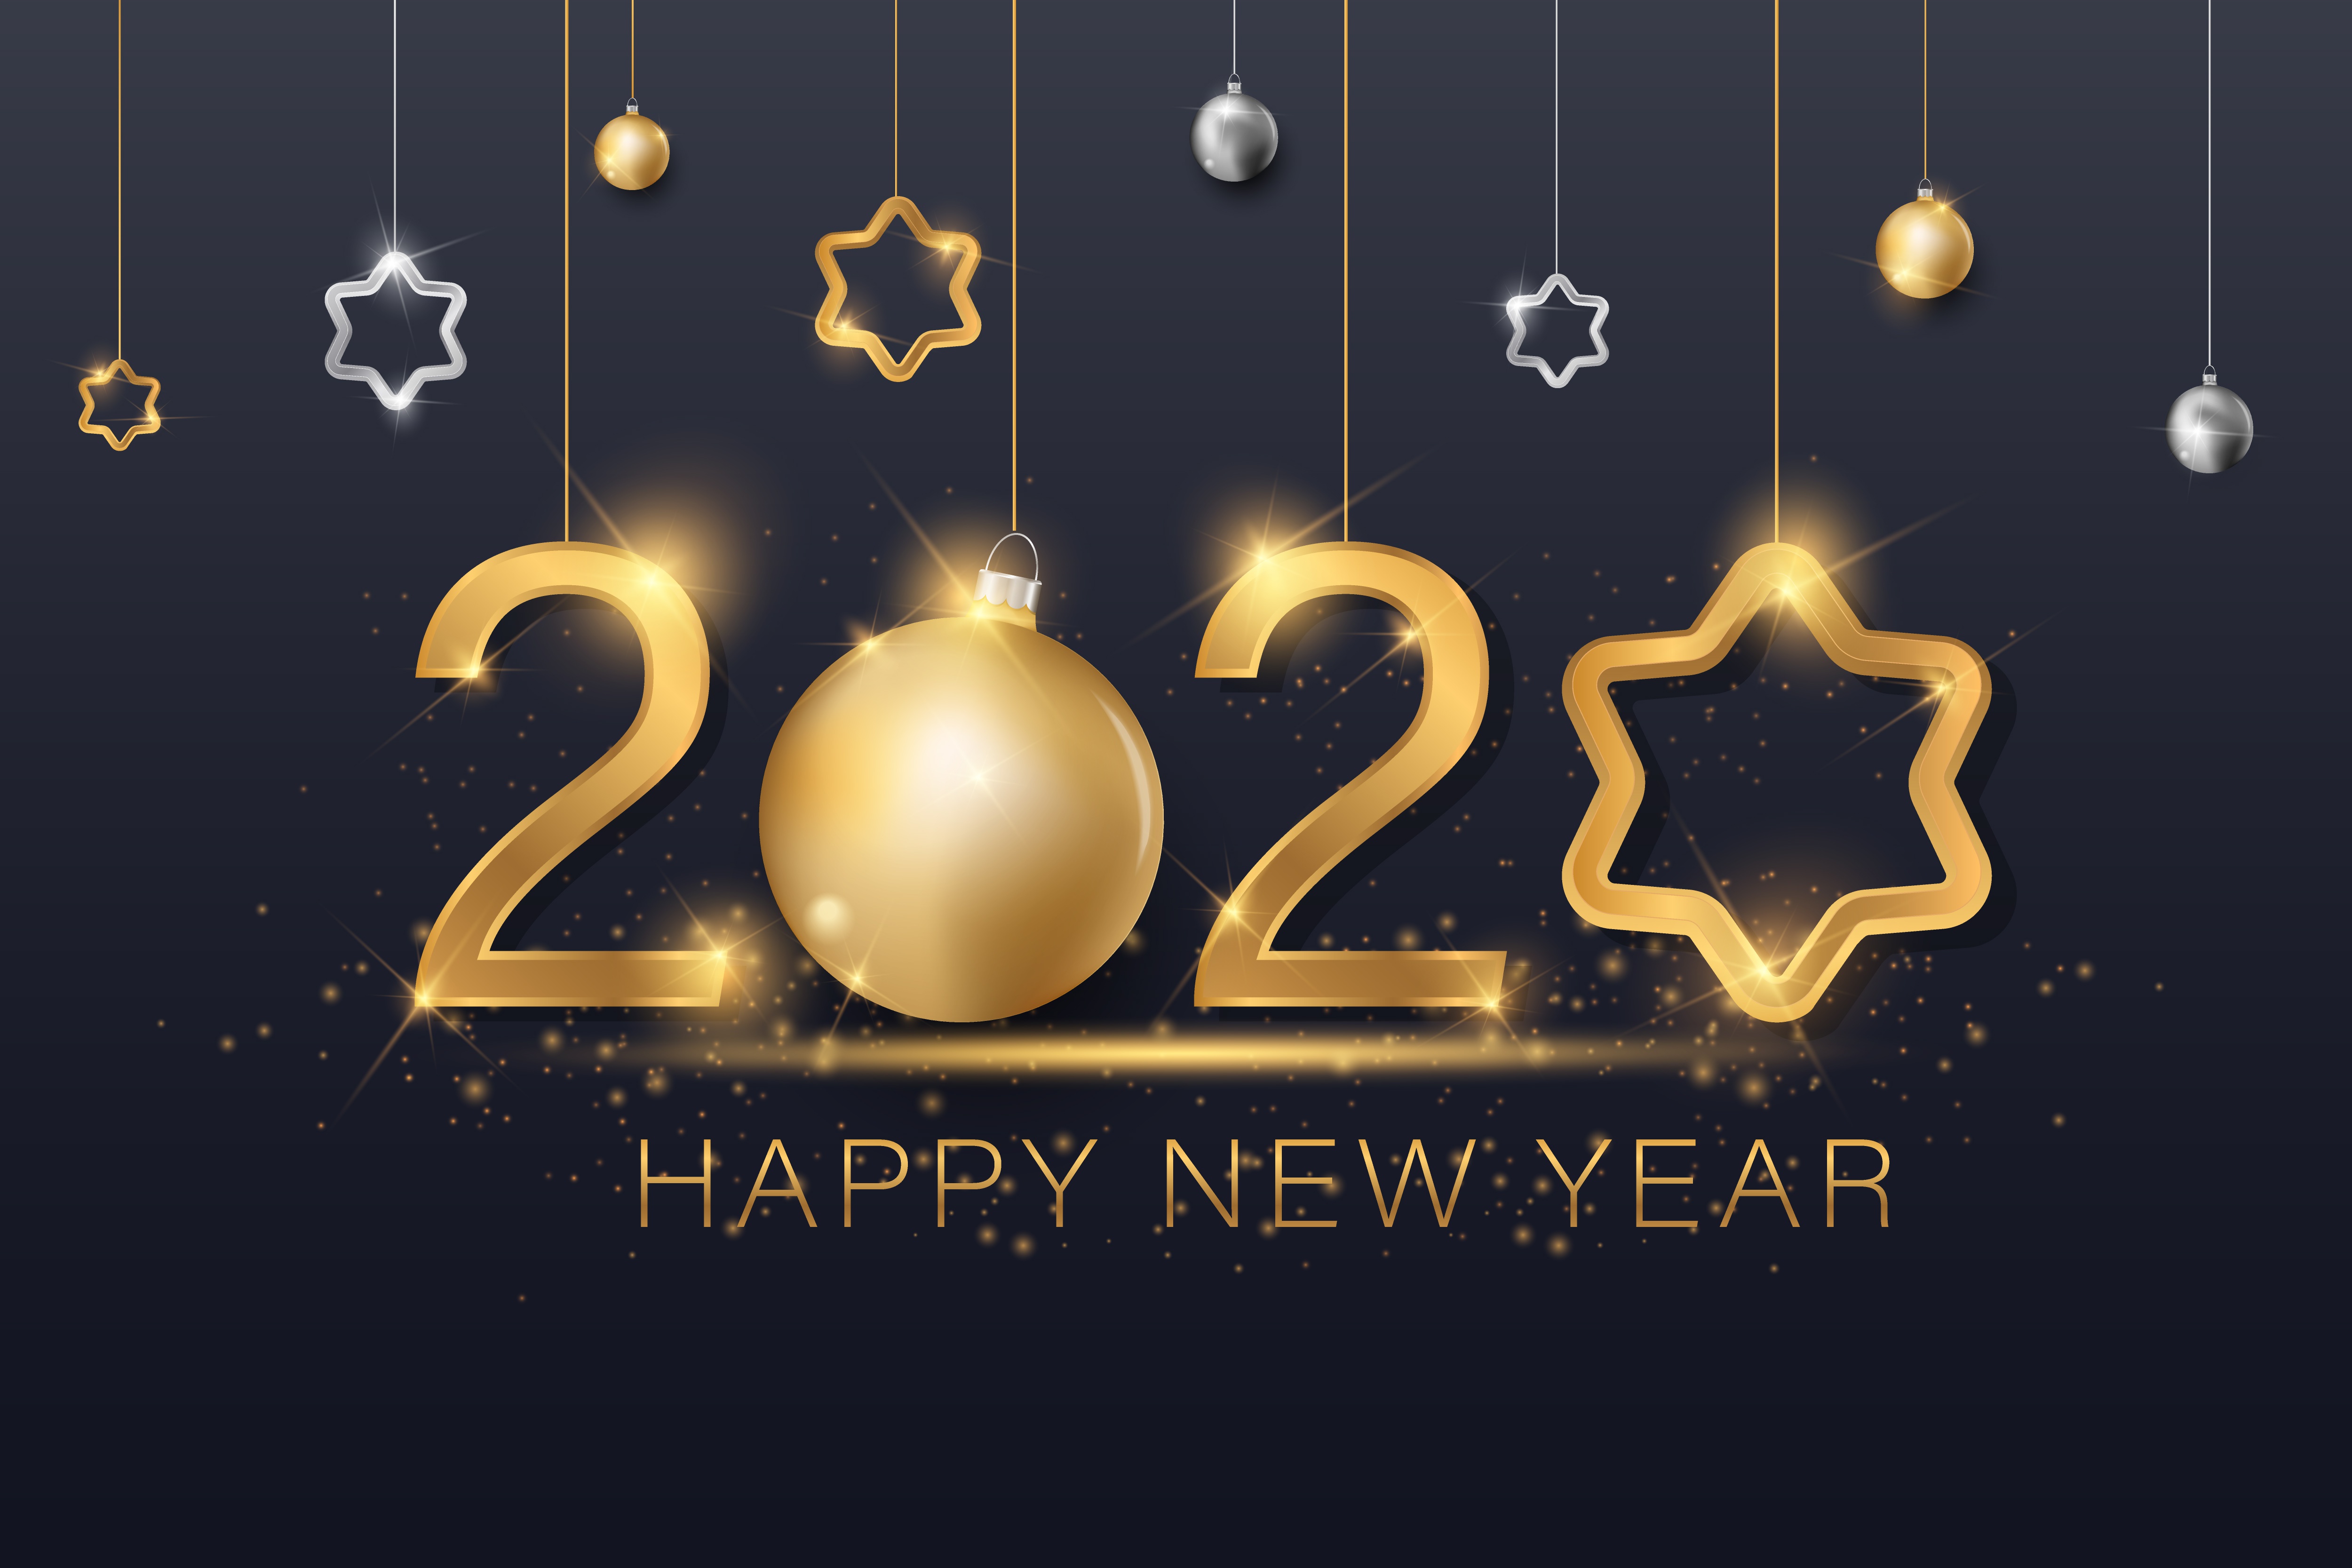 New Year 2020 4k Ultra HD Wallpaper Background Image 5000x3333